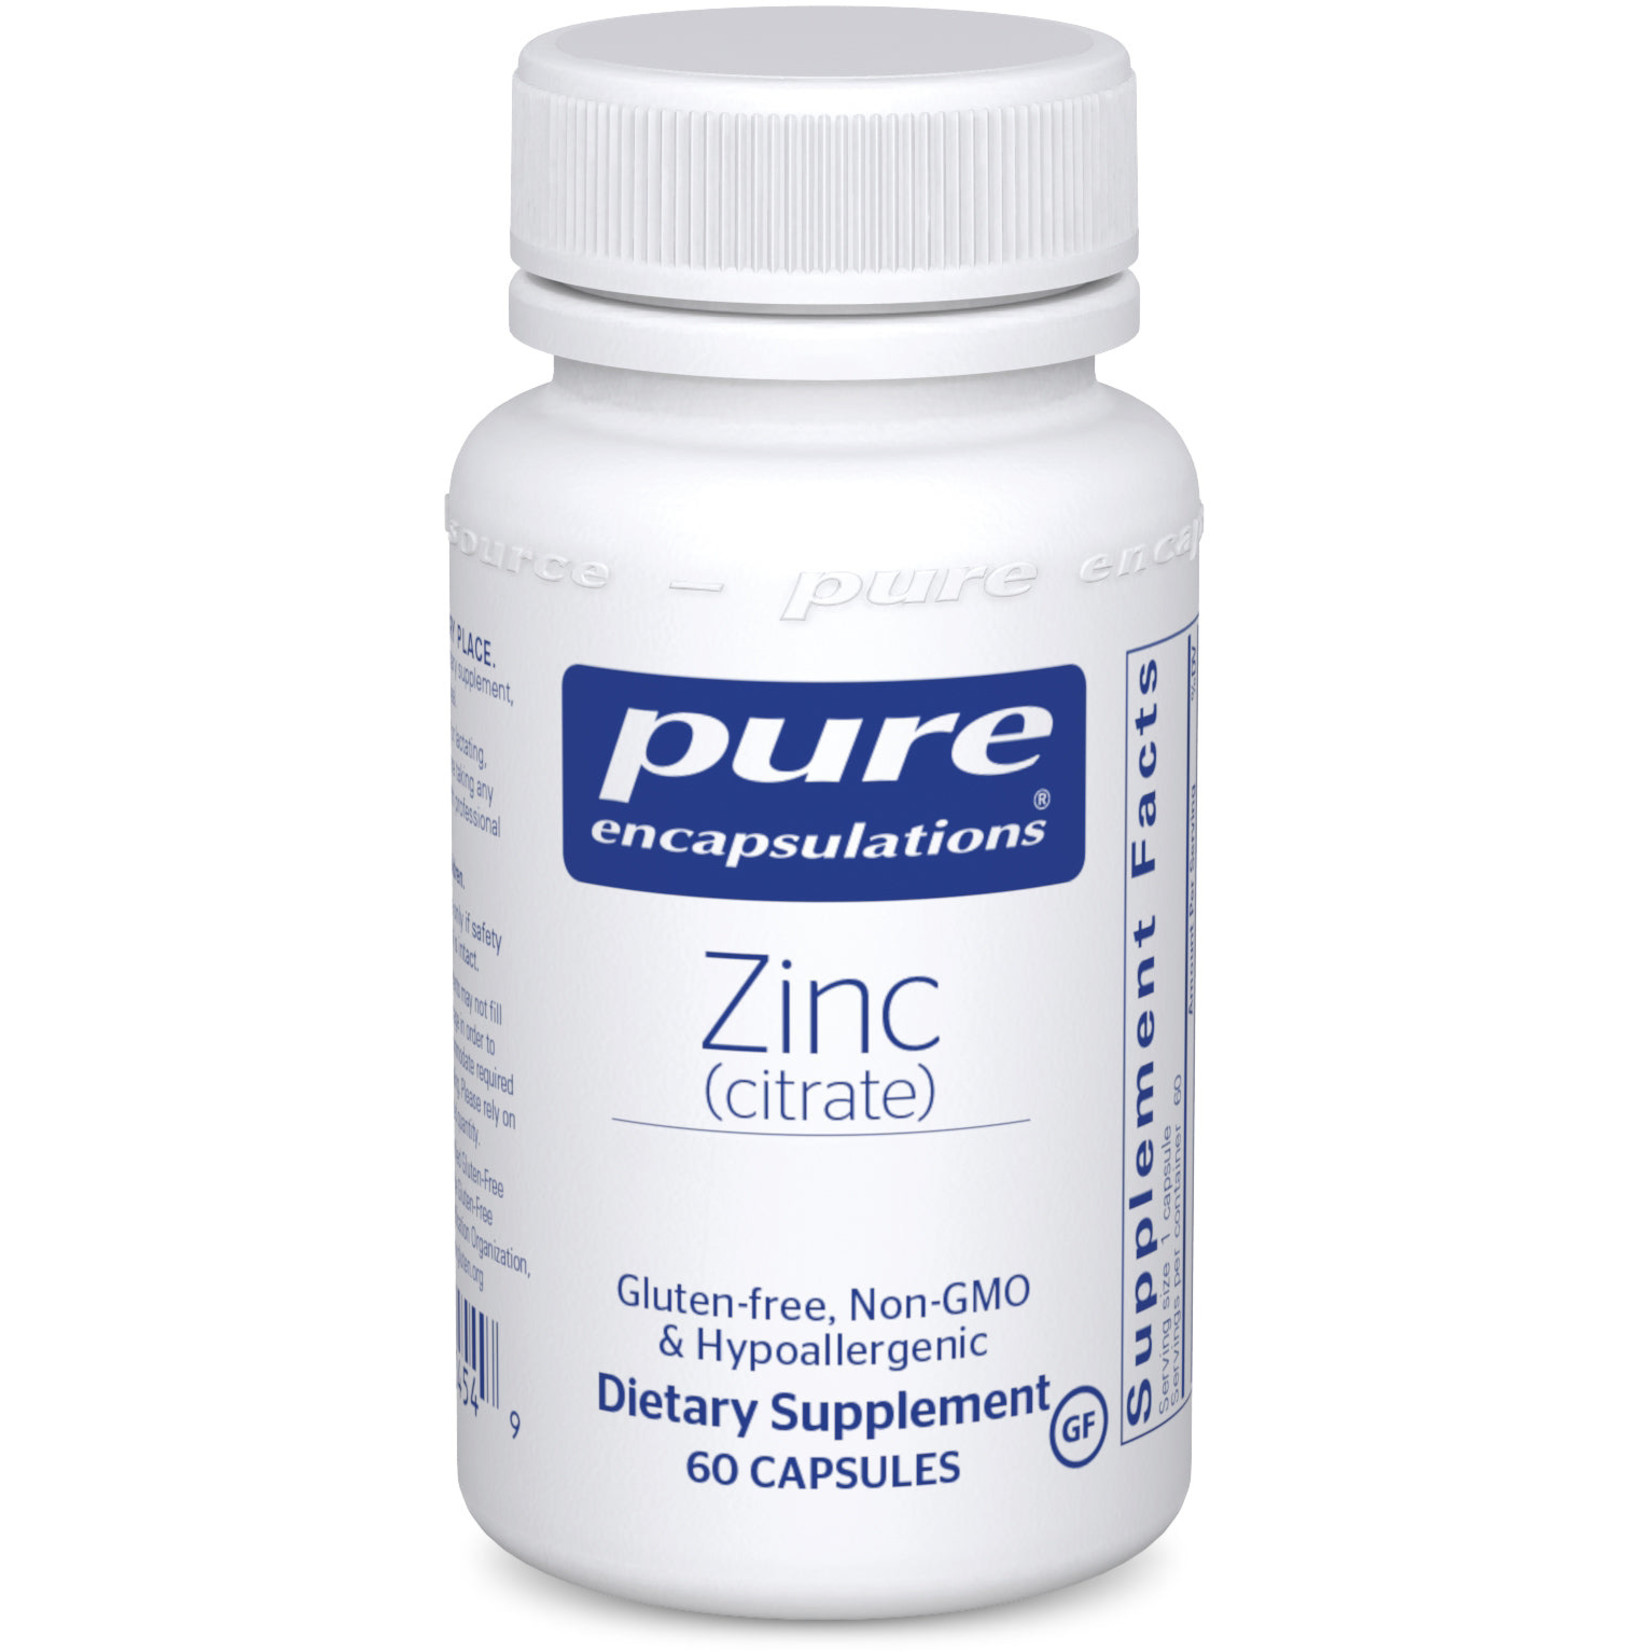 Pure Encapsulations Pure Encapsulations - Zinc Citrate - 60 Capsules